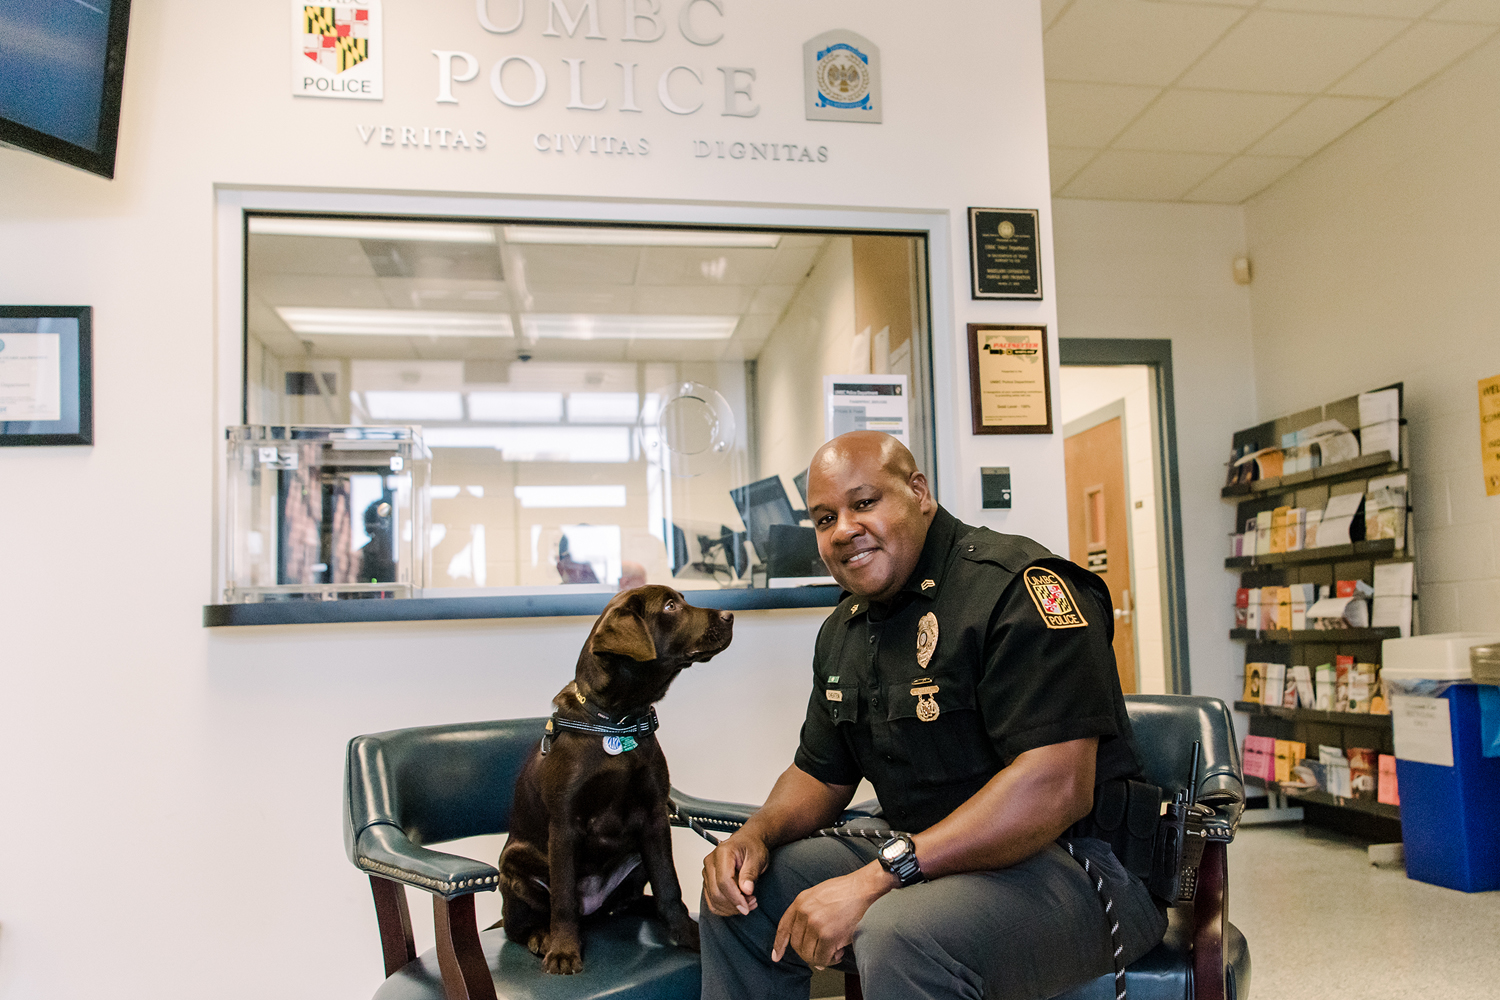 Sergeant Cheatem smiles at the camera as UMBC Police comfort dog looks at him